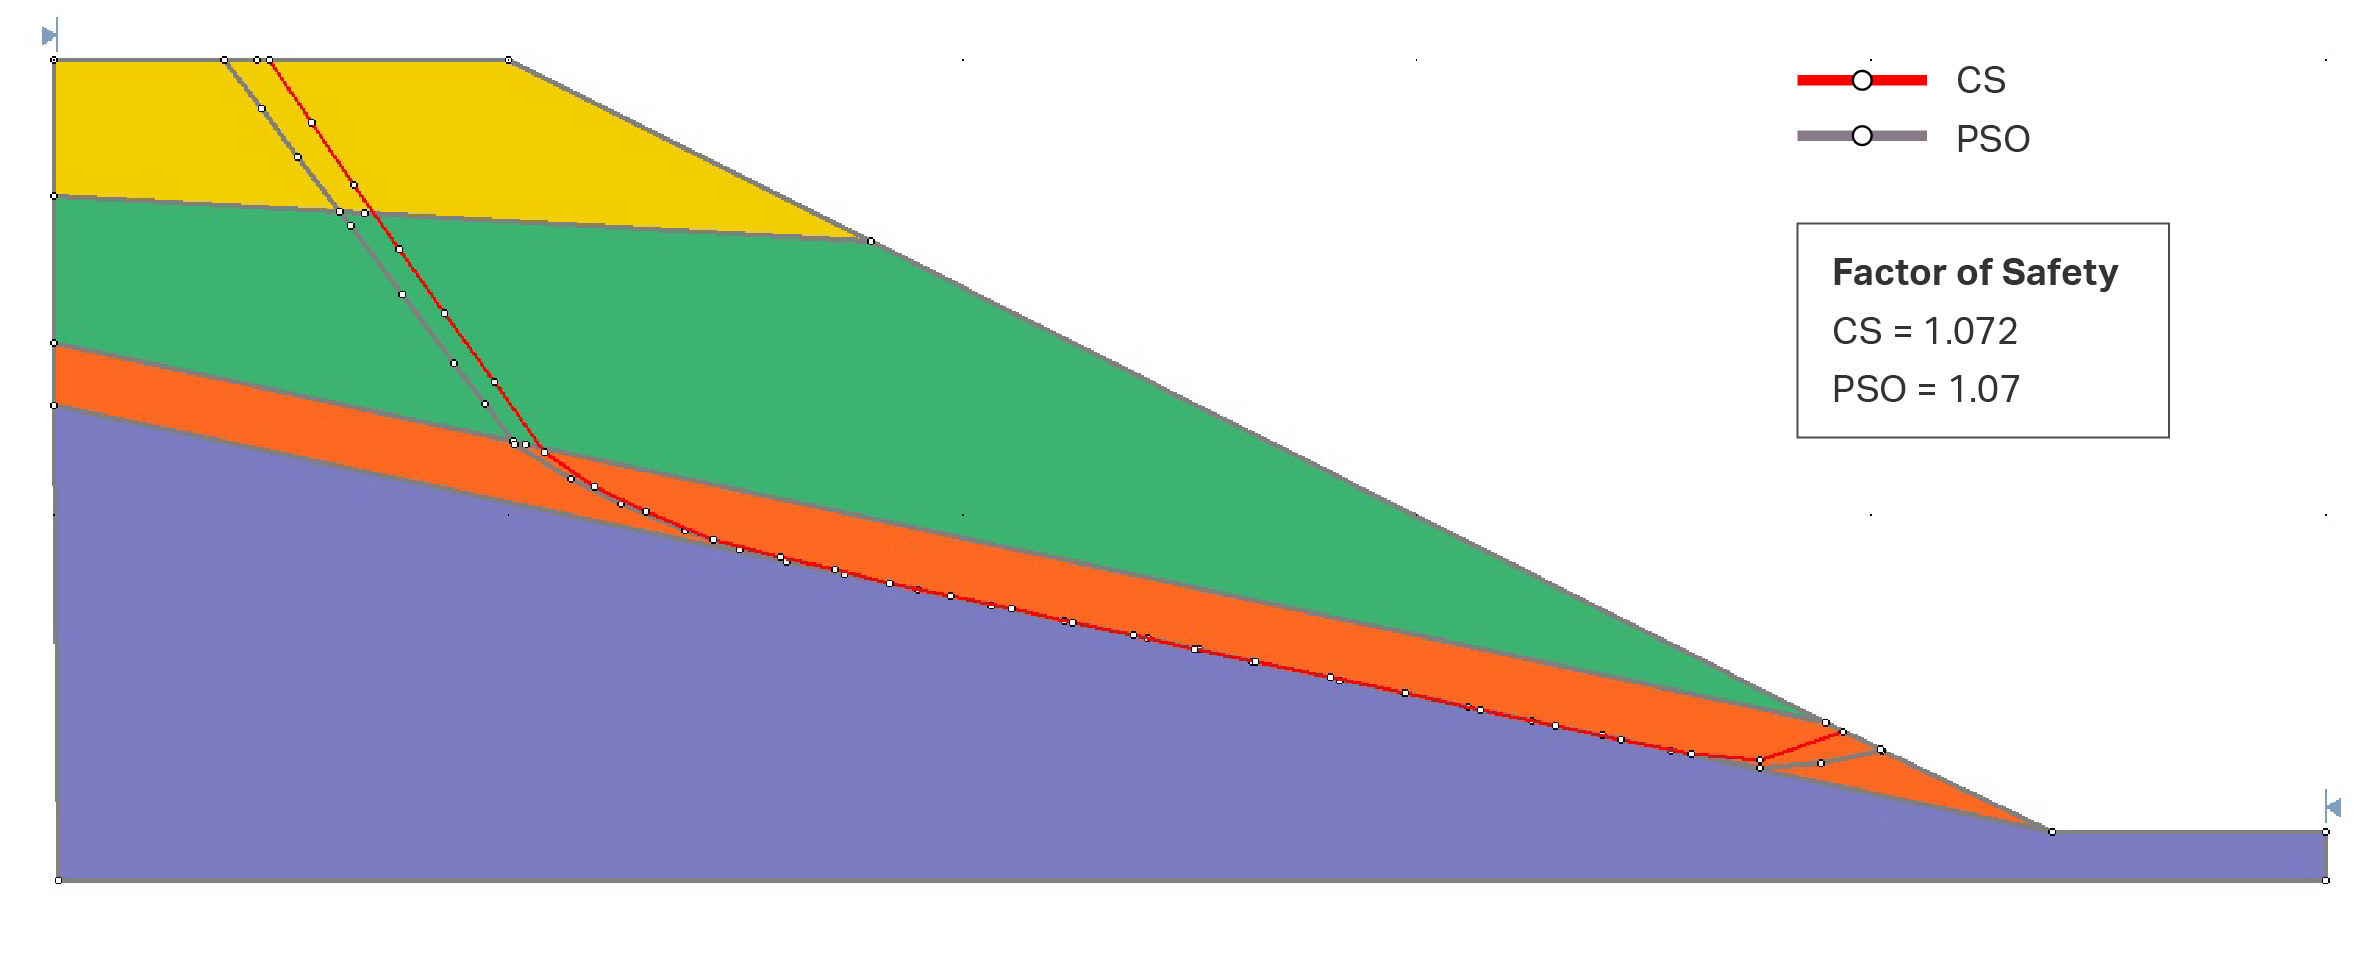 Figure 2. Problem 1 results using Rocscience Slide2